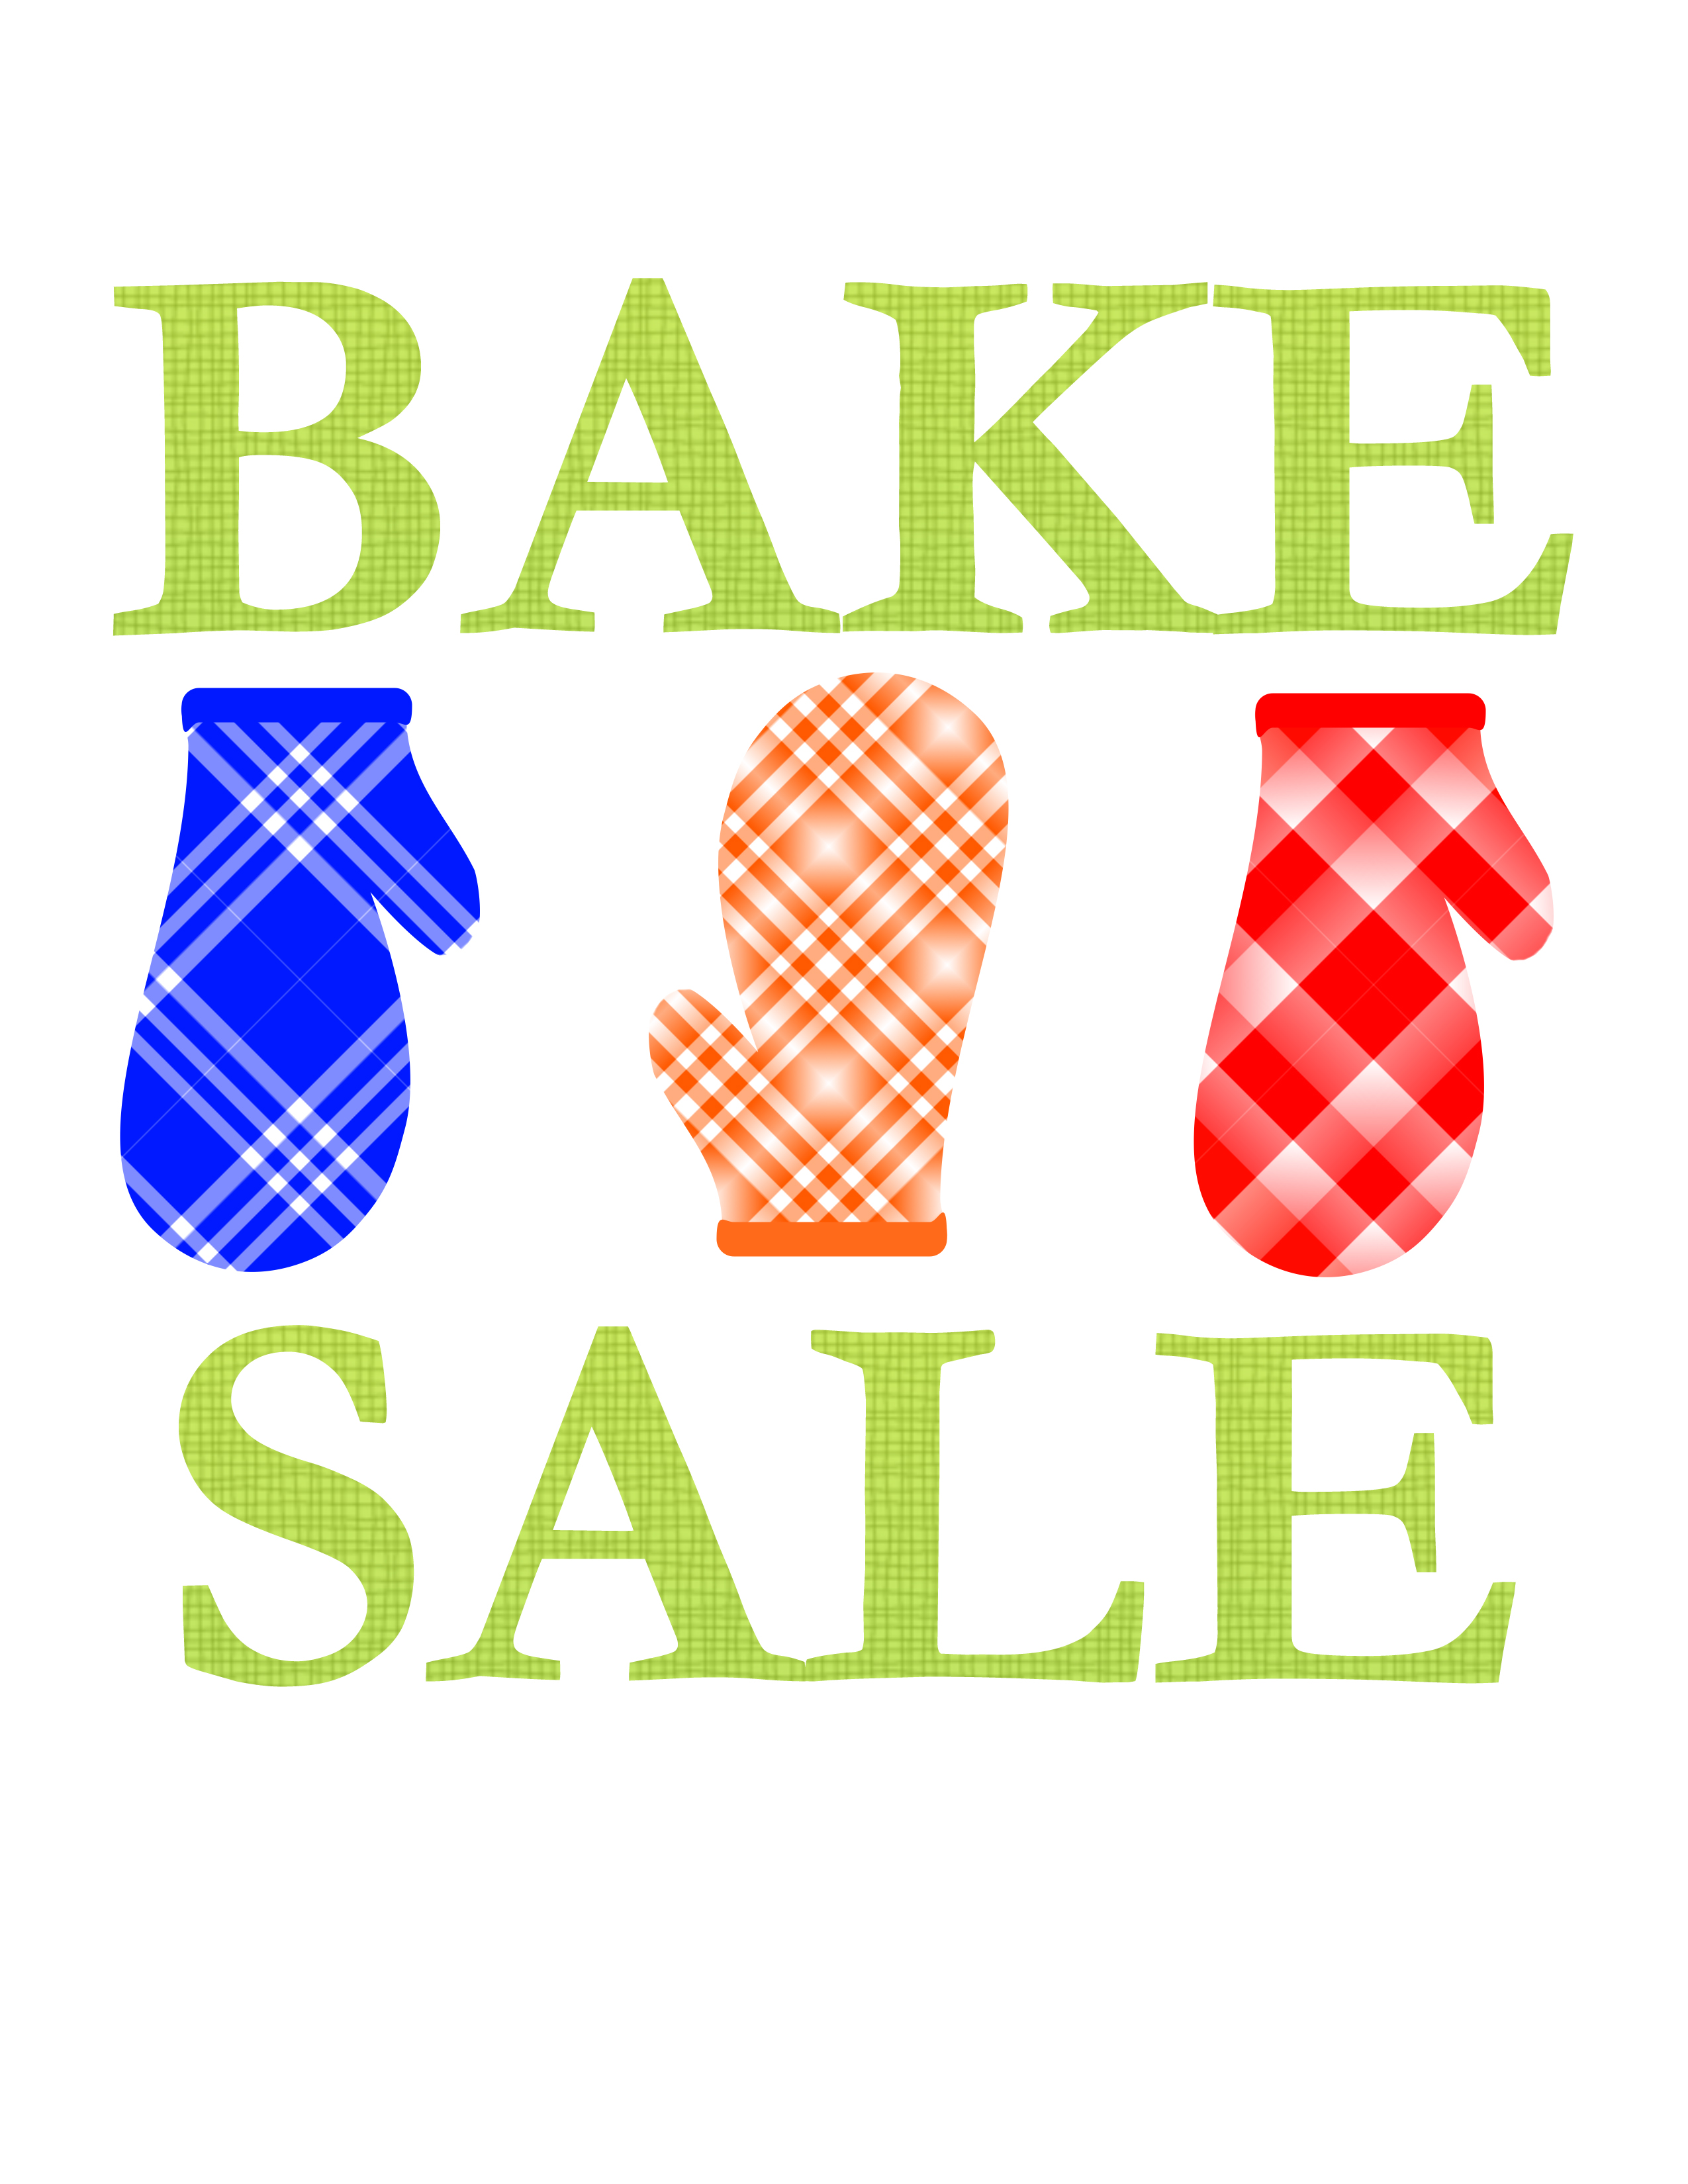 Bake Sale Clipart